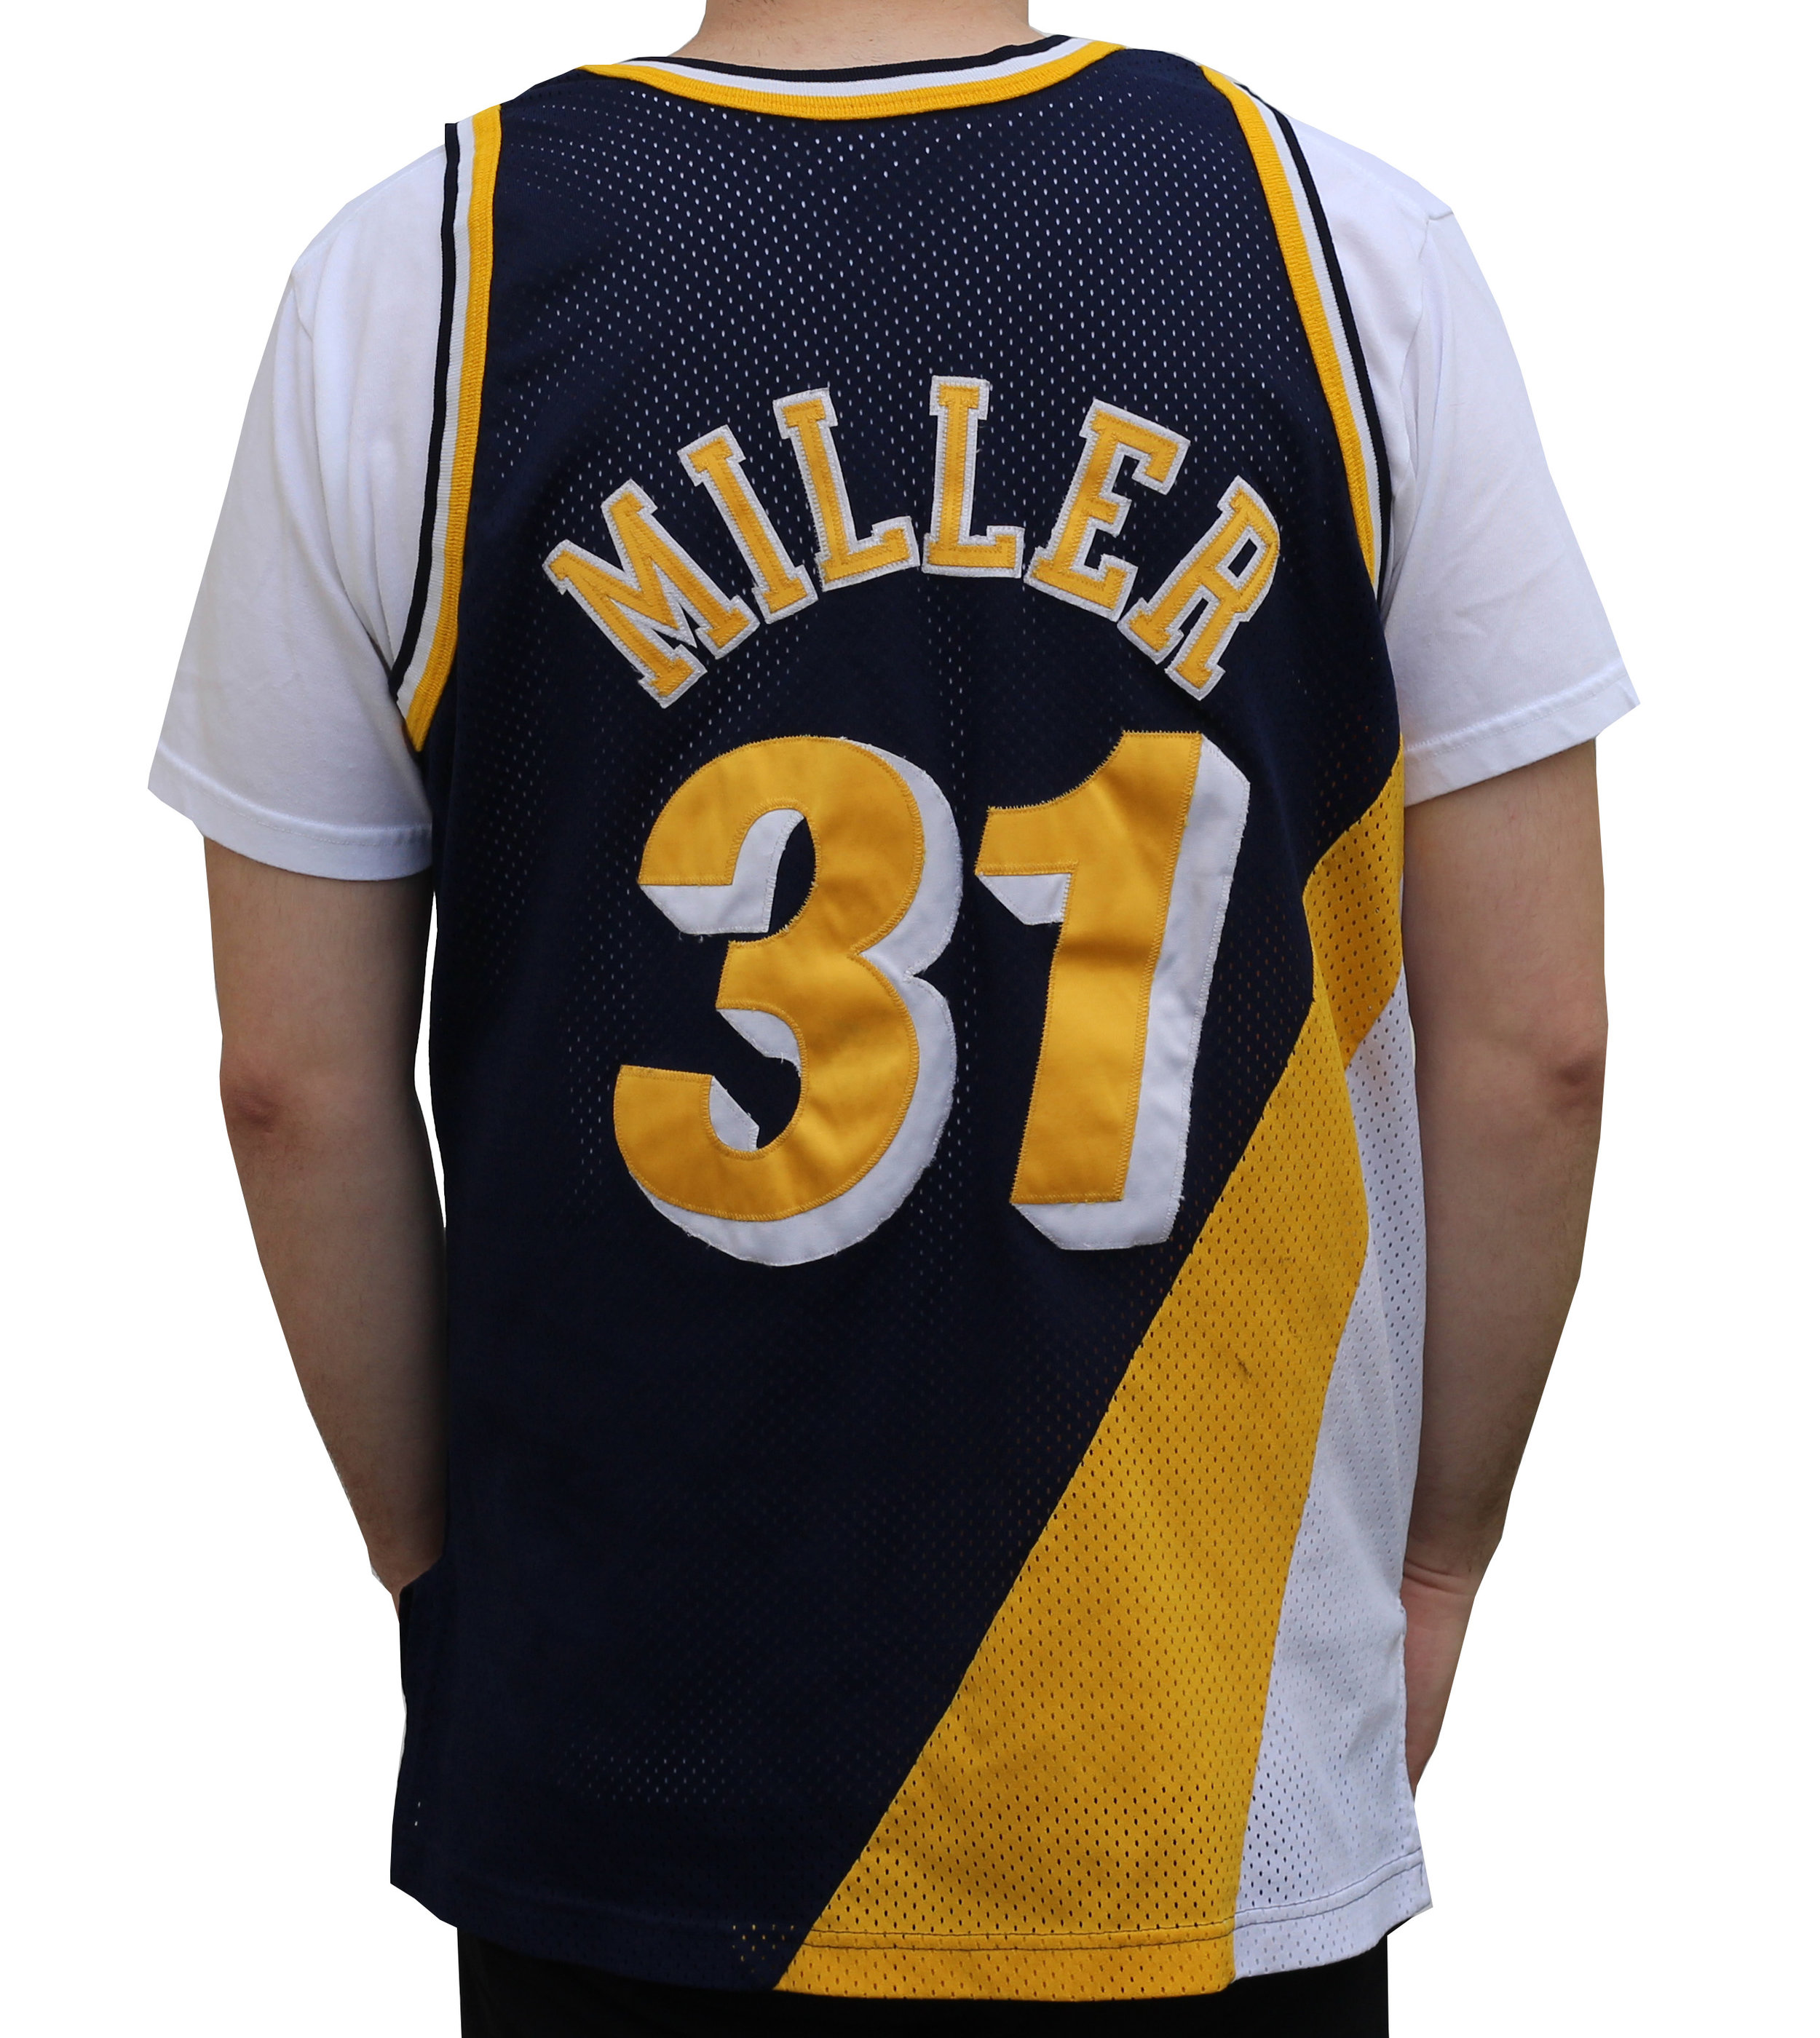 reggie miller authentic jersey